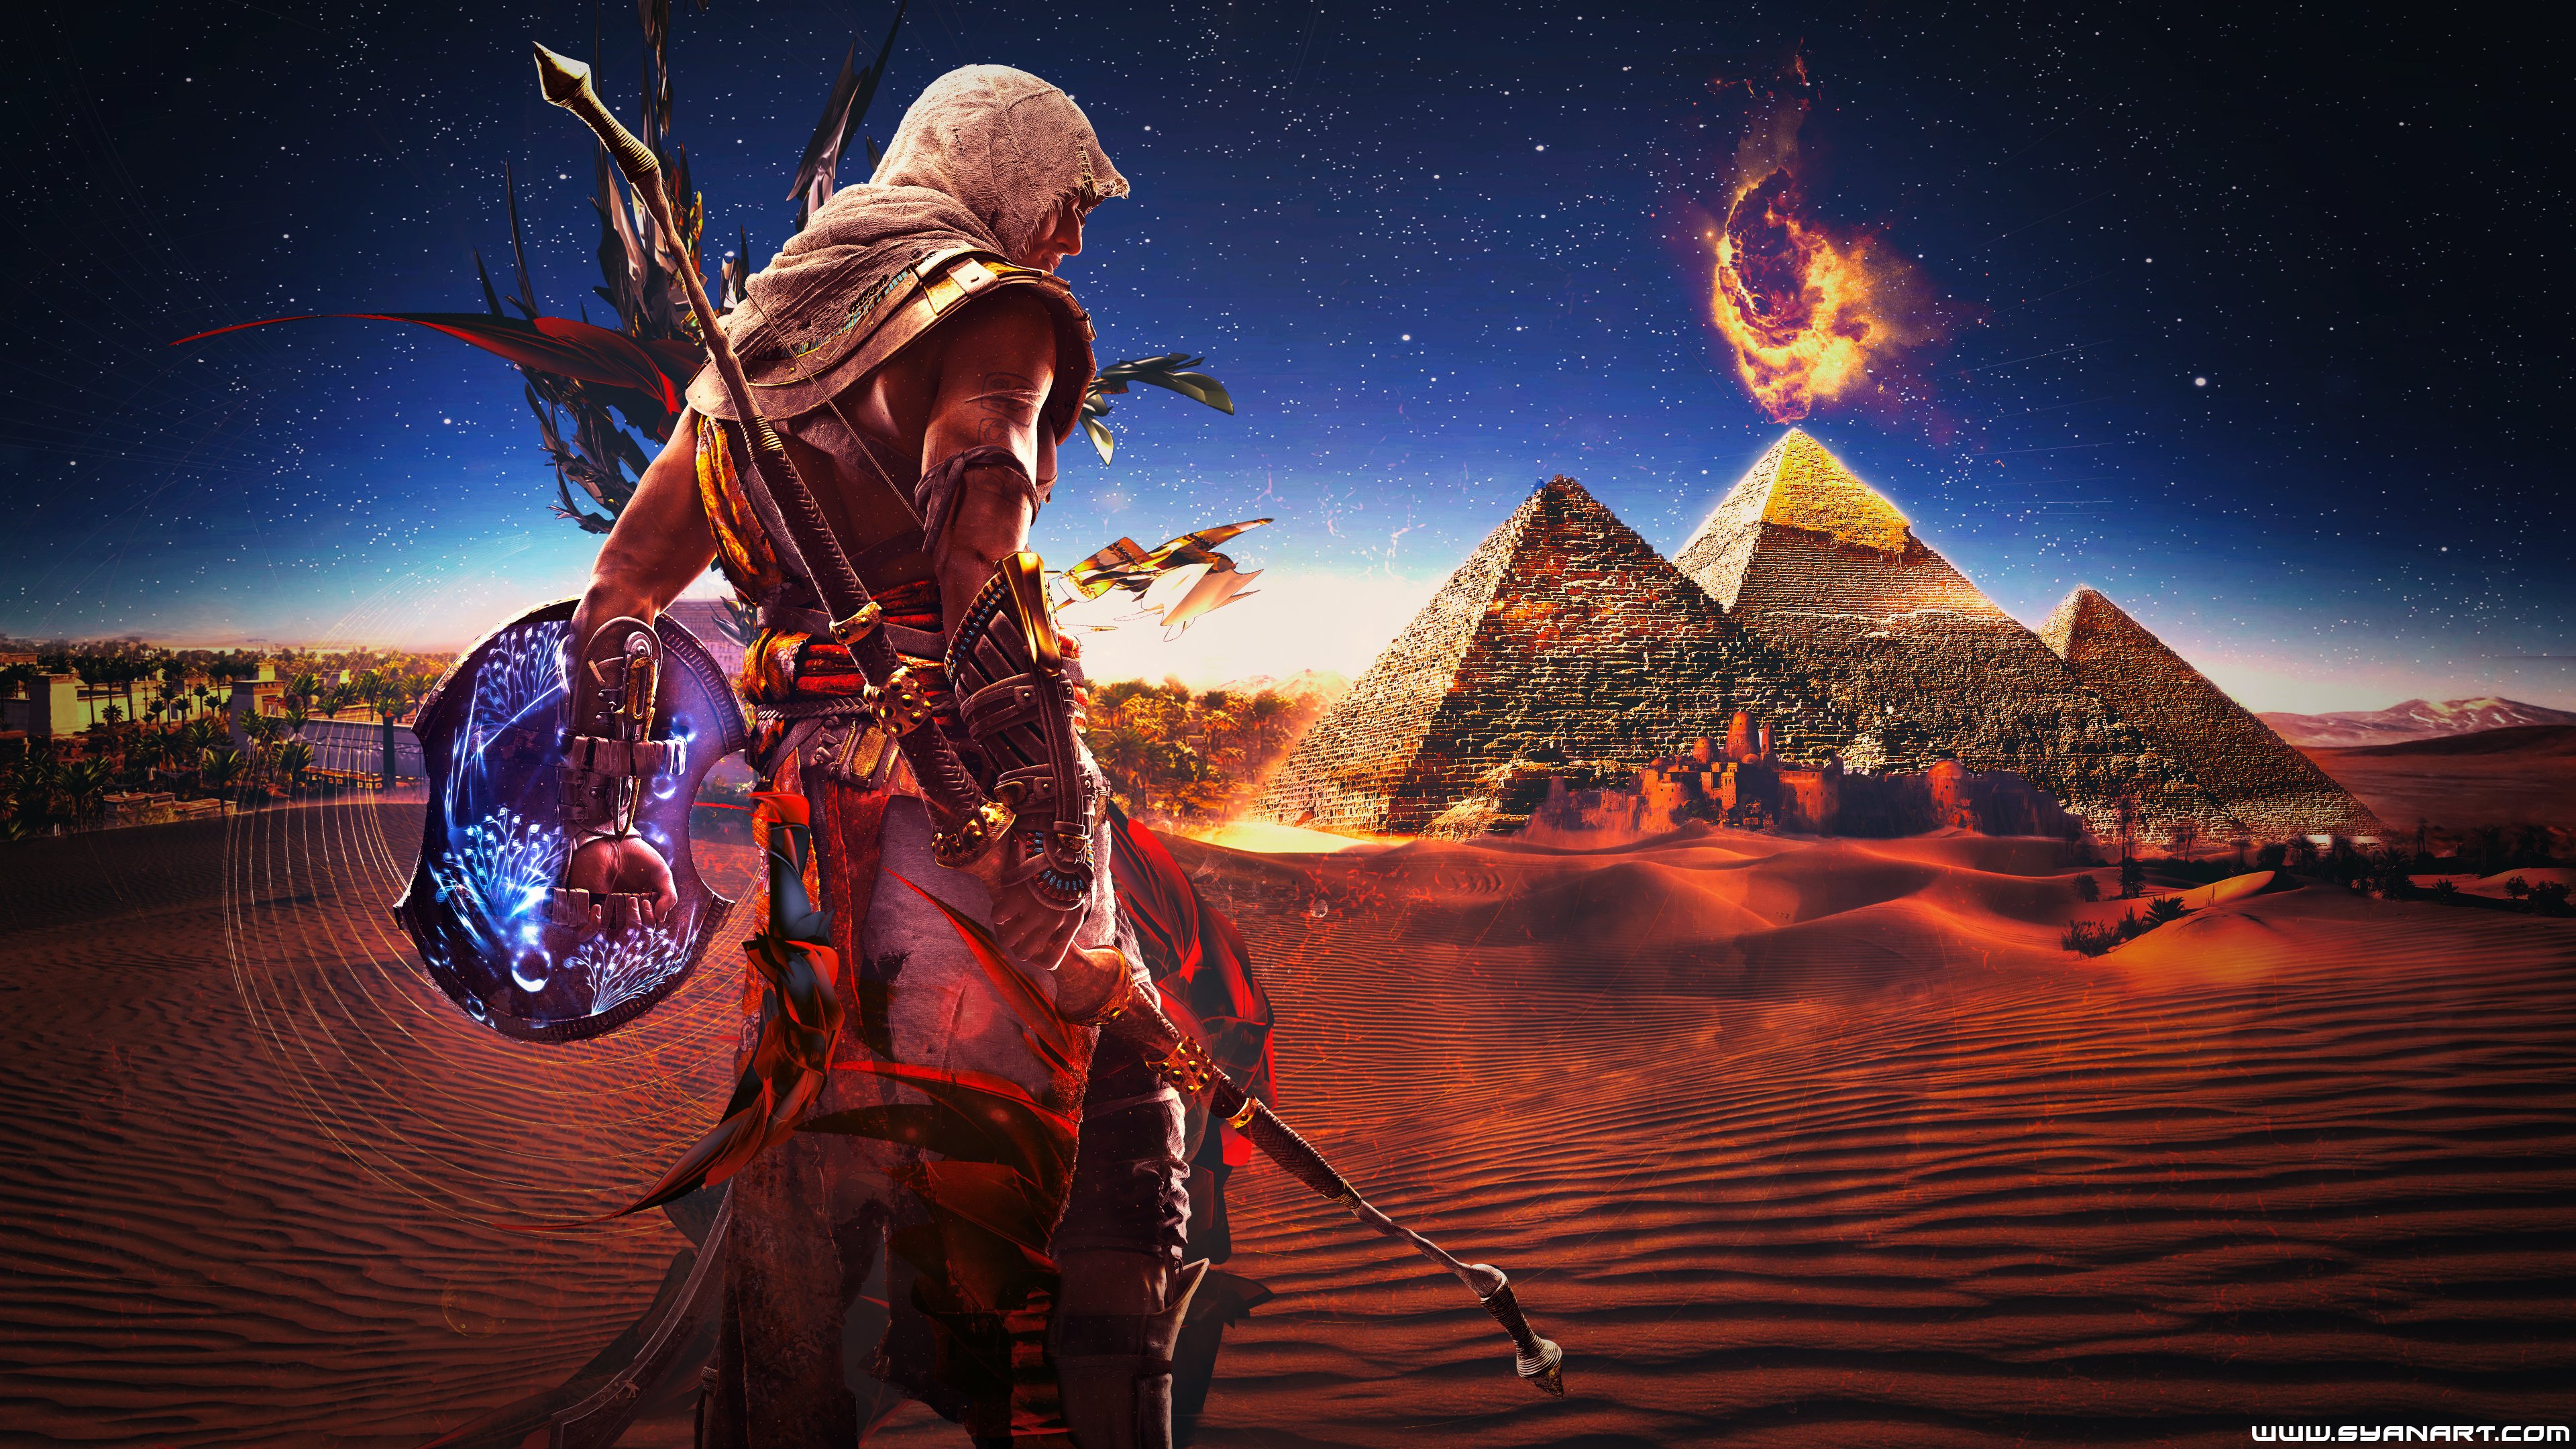 Assassins Creed, Pyramid, Video games, Fan art, Assassin&s